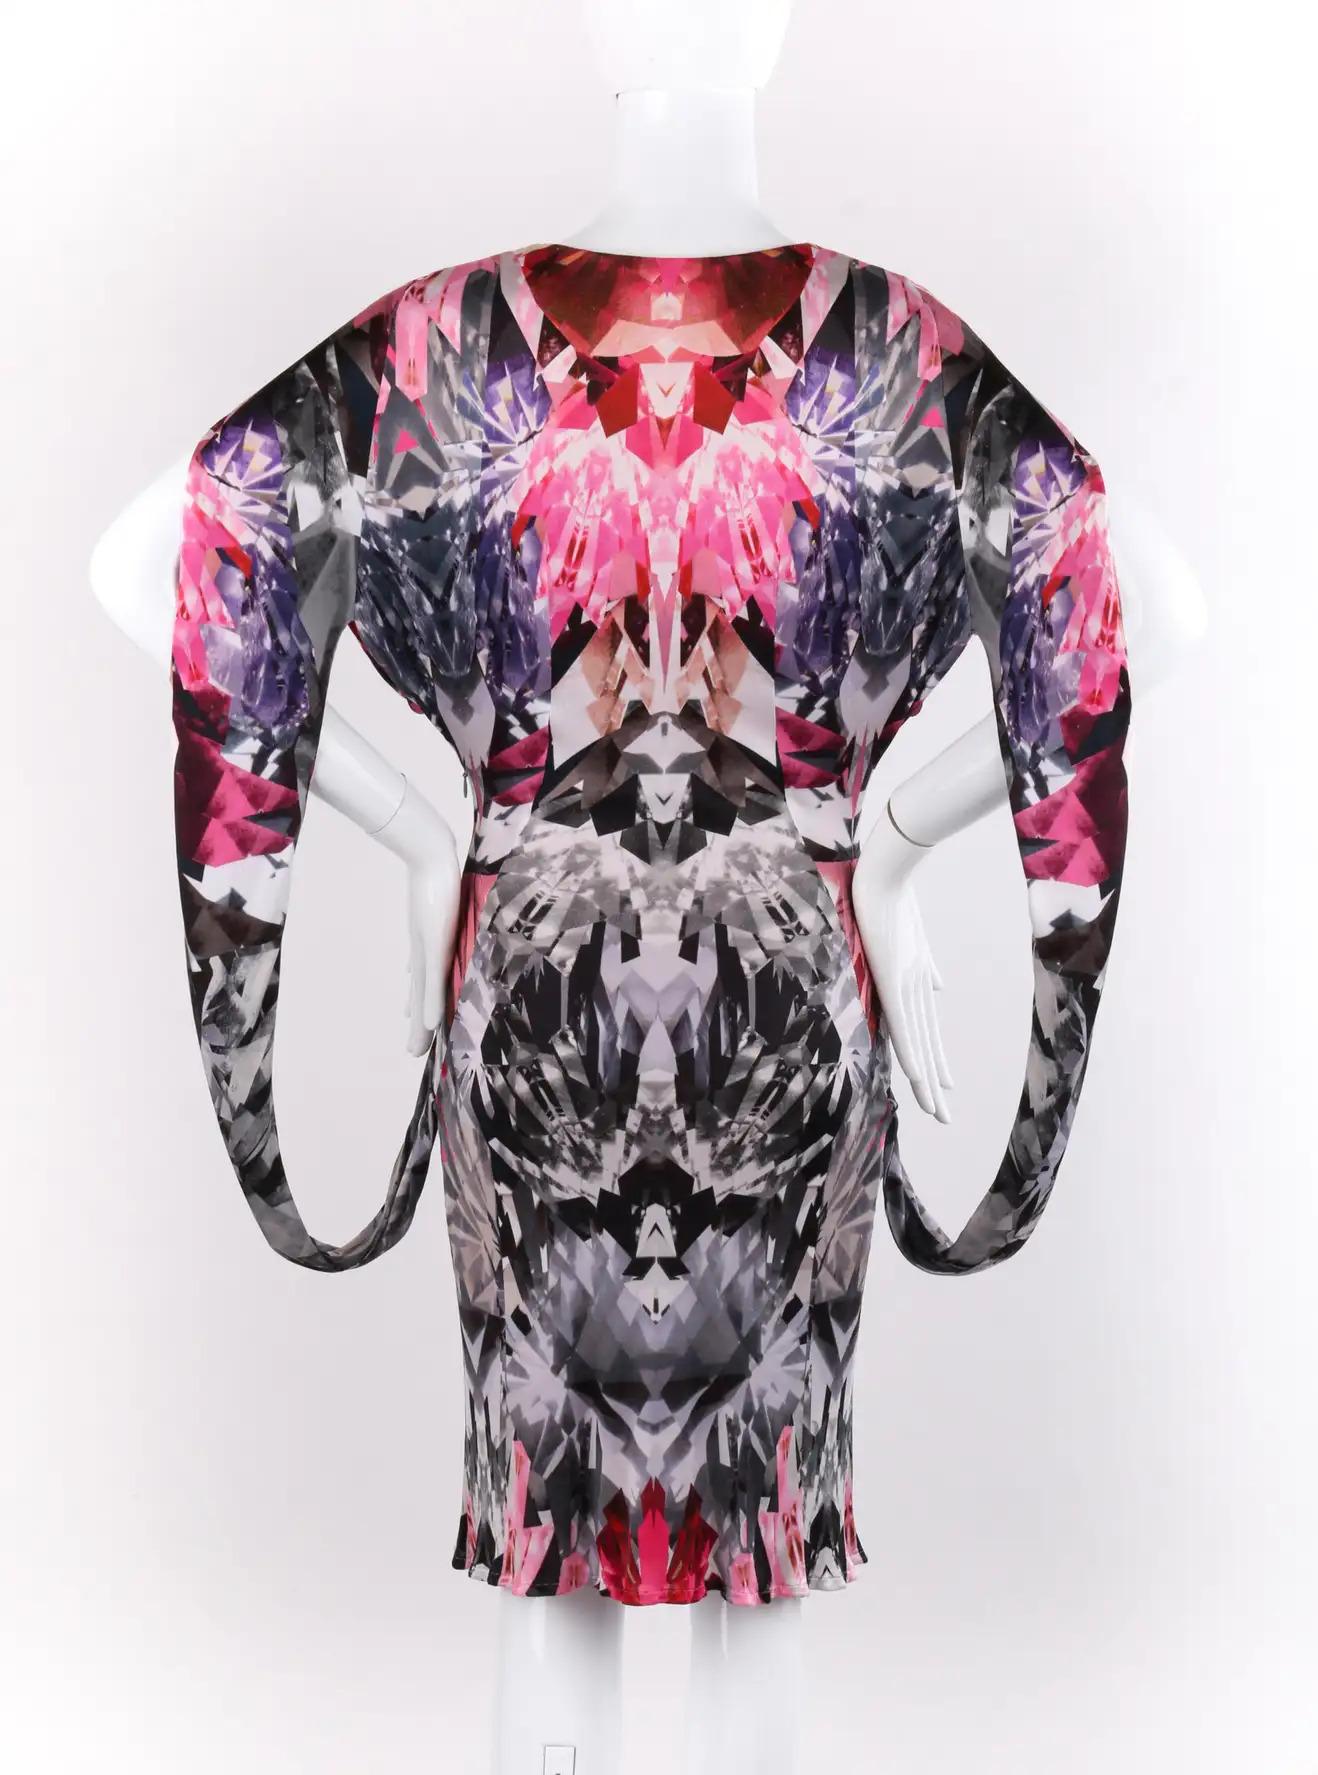 Black Alexander McQueen S/S 2009 Kaleidoscope Crystal Dress with dolman sleeves